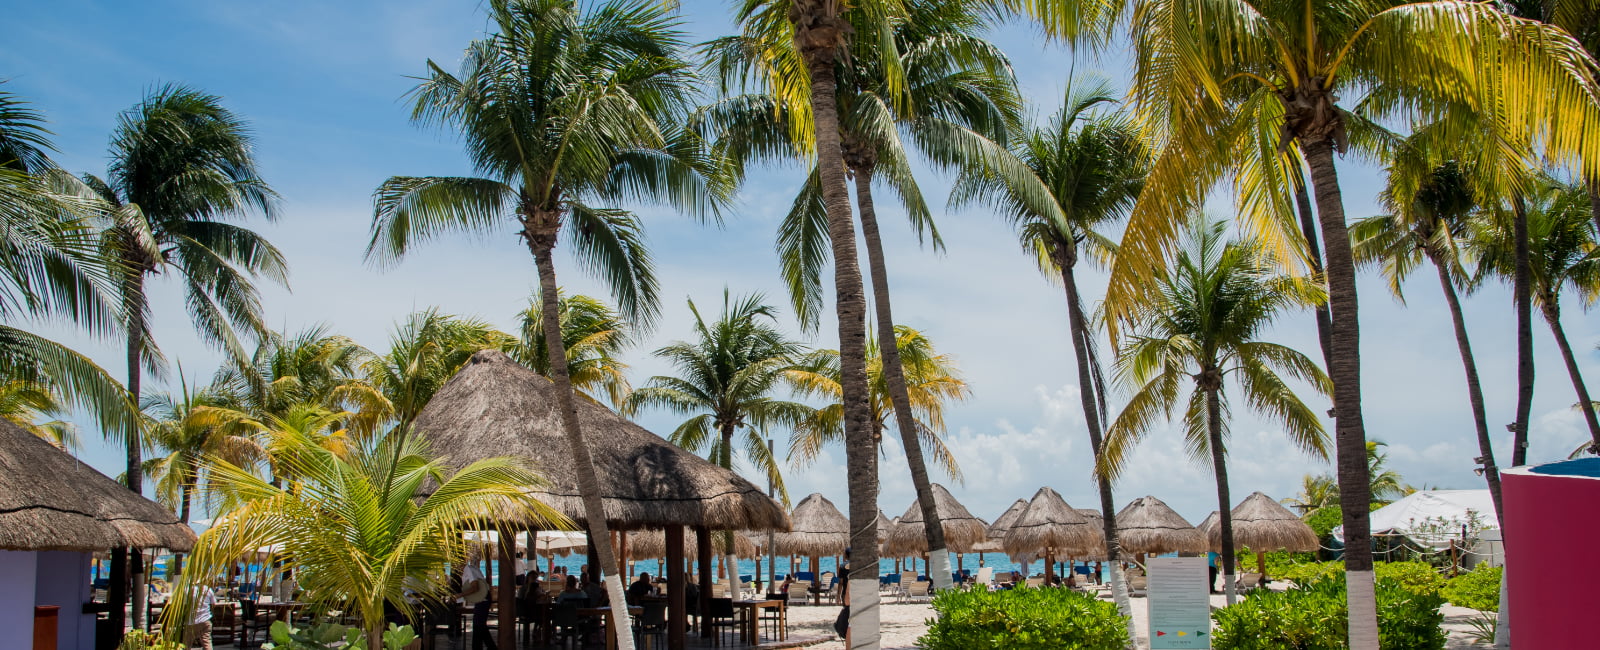 Playa Norte Beach Club | Isla Mujeres, México